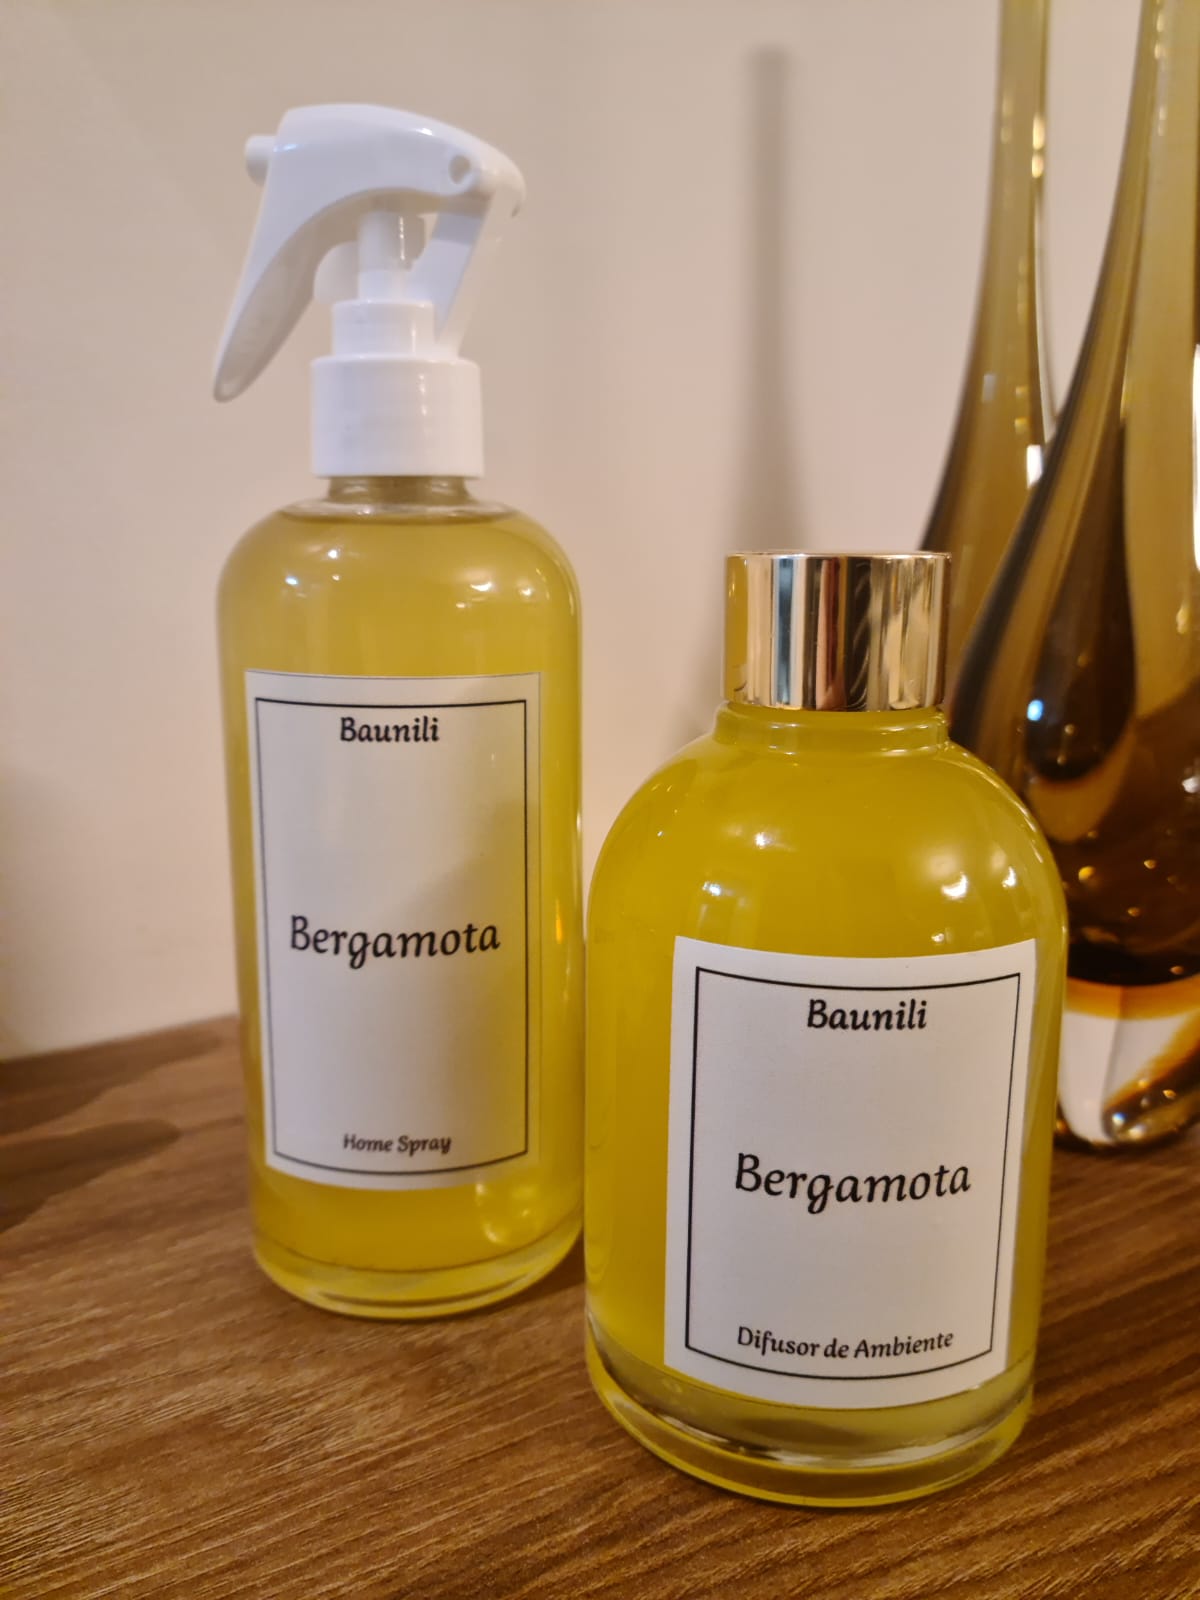 Home Spray Classic - Bergamota